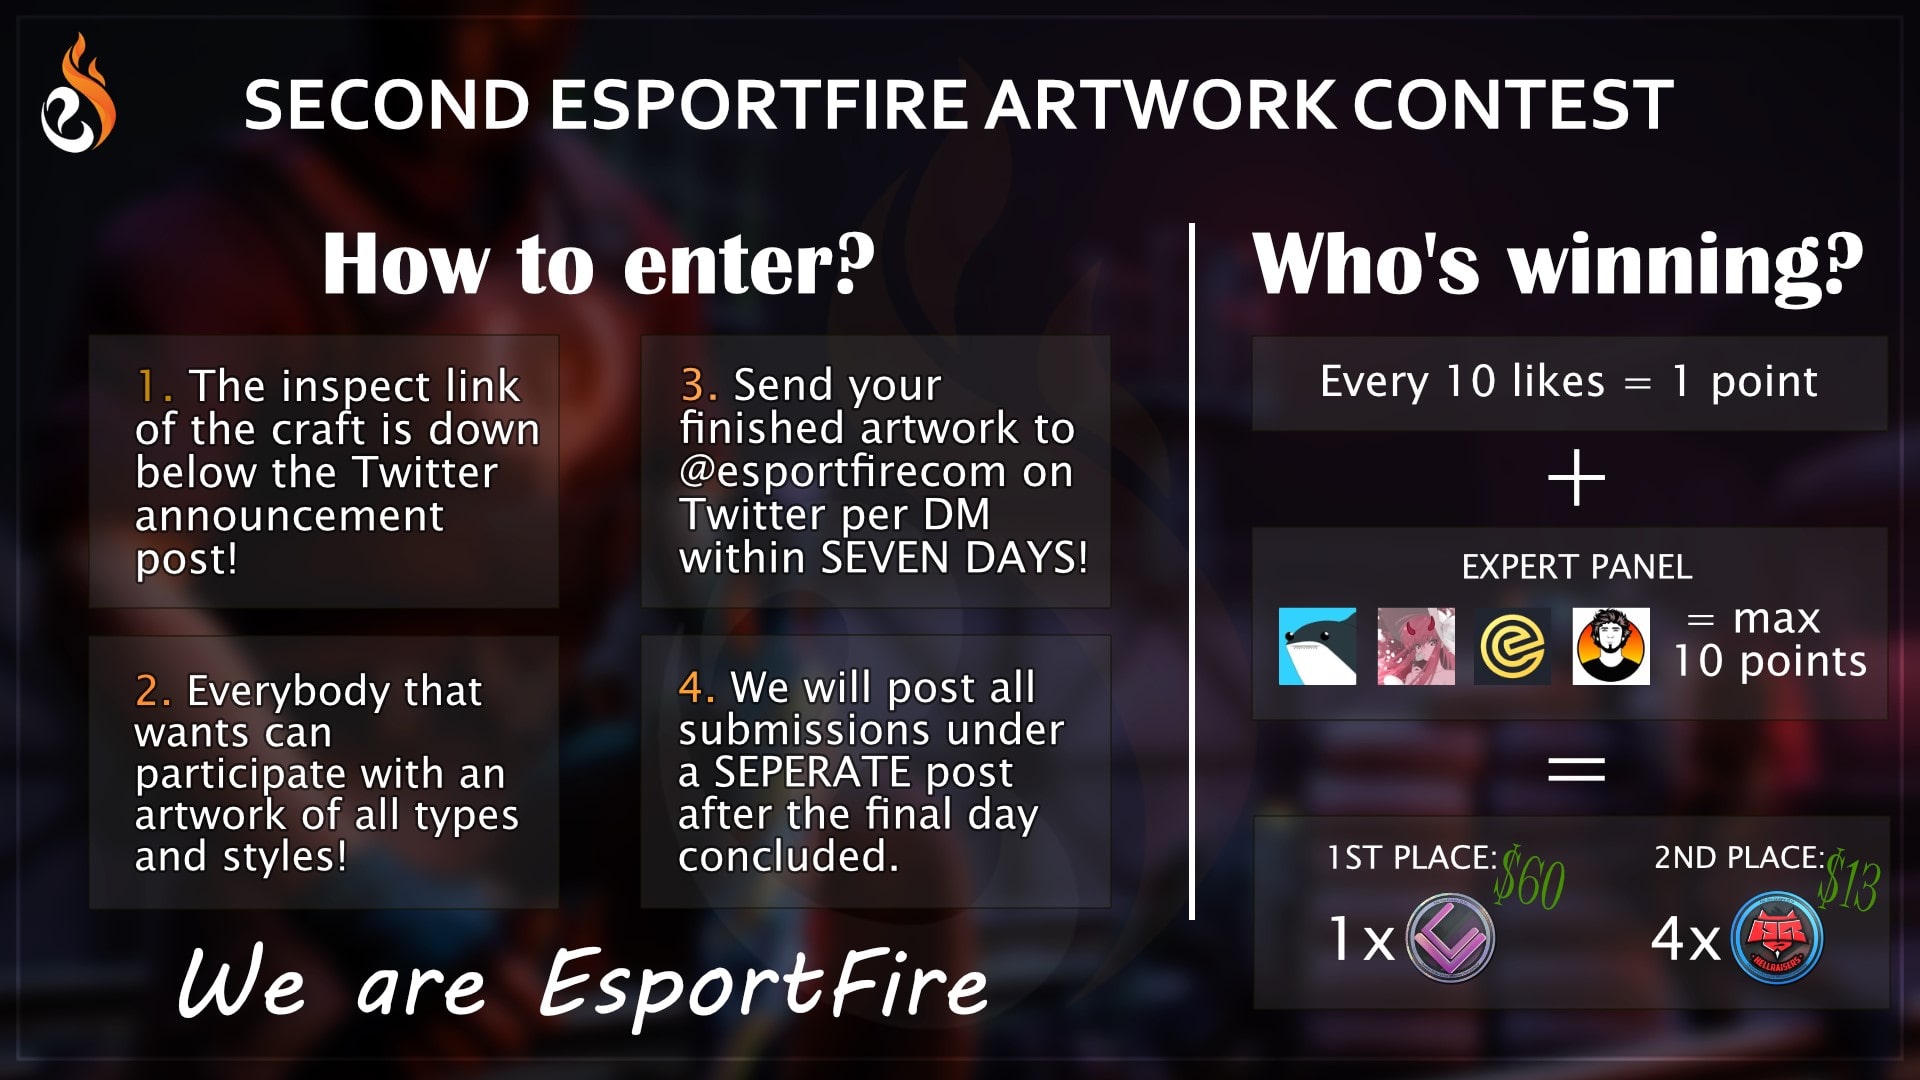 CS:GO EsportFire Artwork Contest General Information